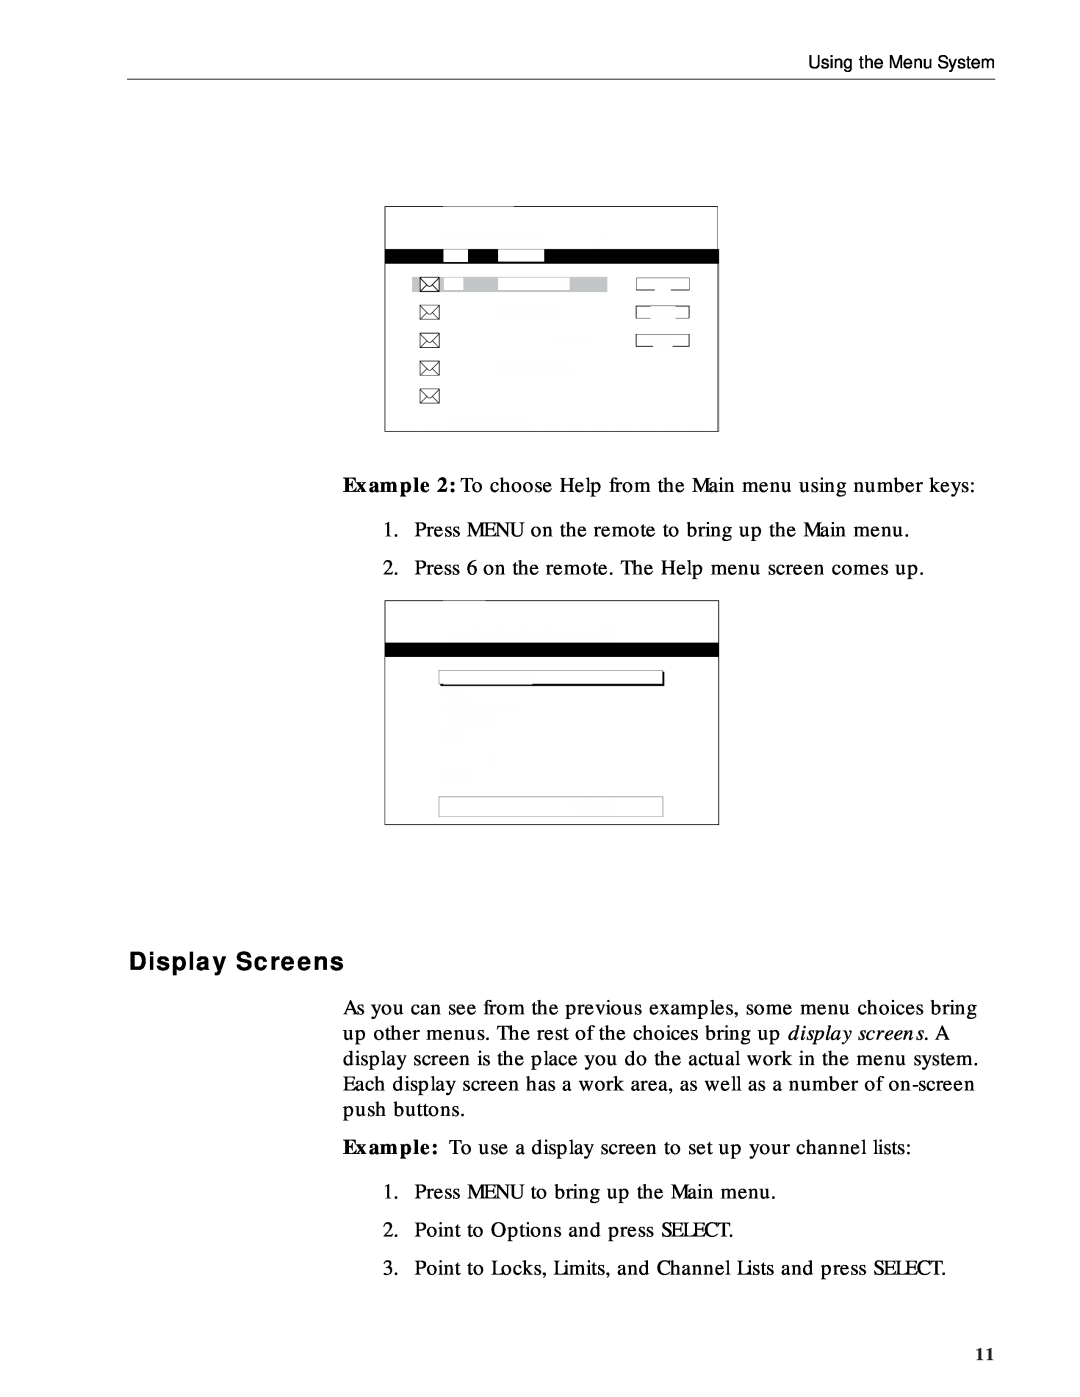 RCA DRD212NW user manual Display Screens 